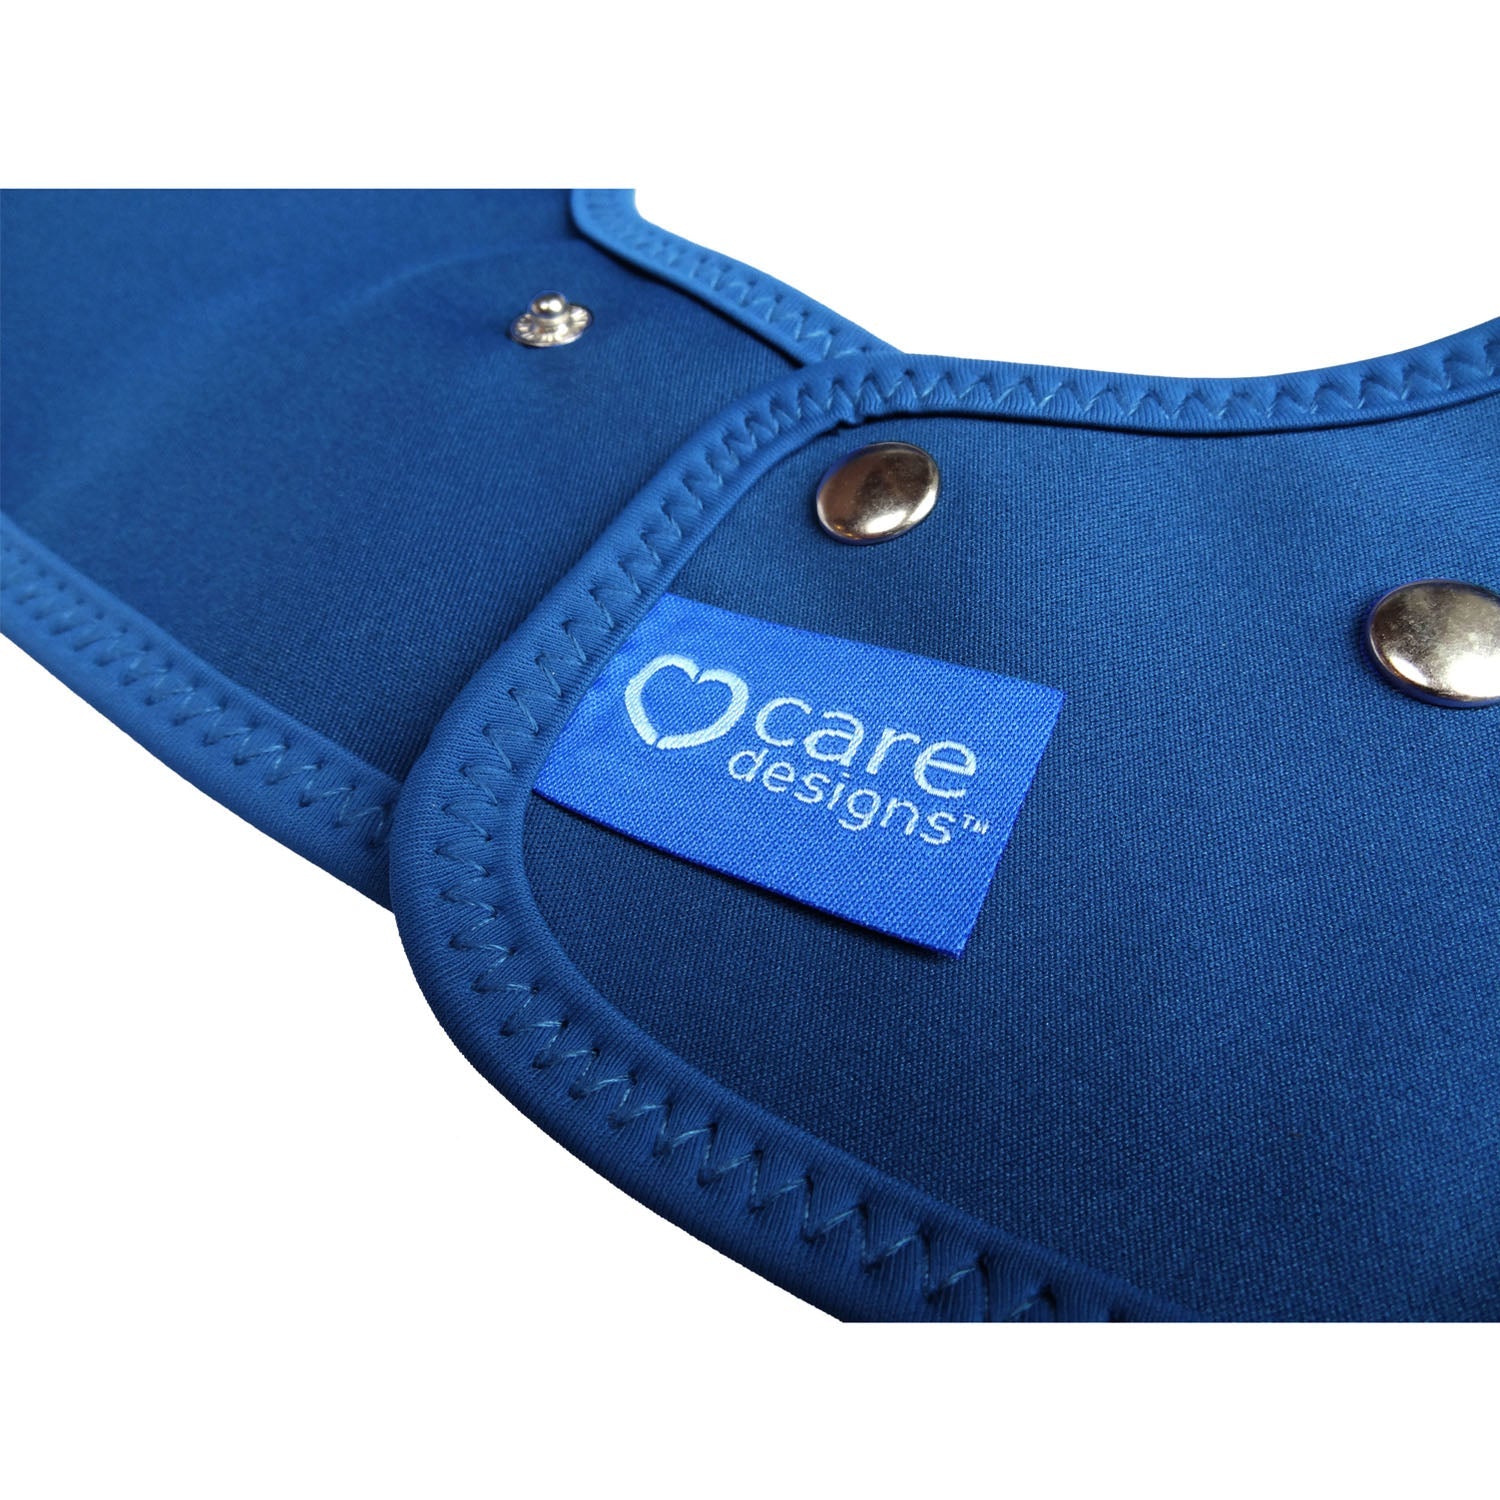 Tabard style adult bib - Large Blue (UK VAT Exempt) | Health Care | Care Designs